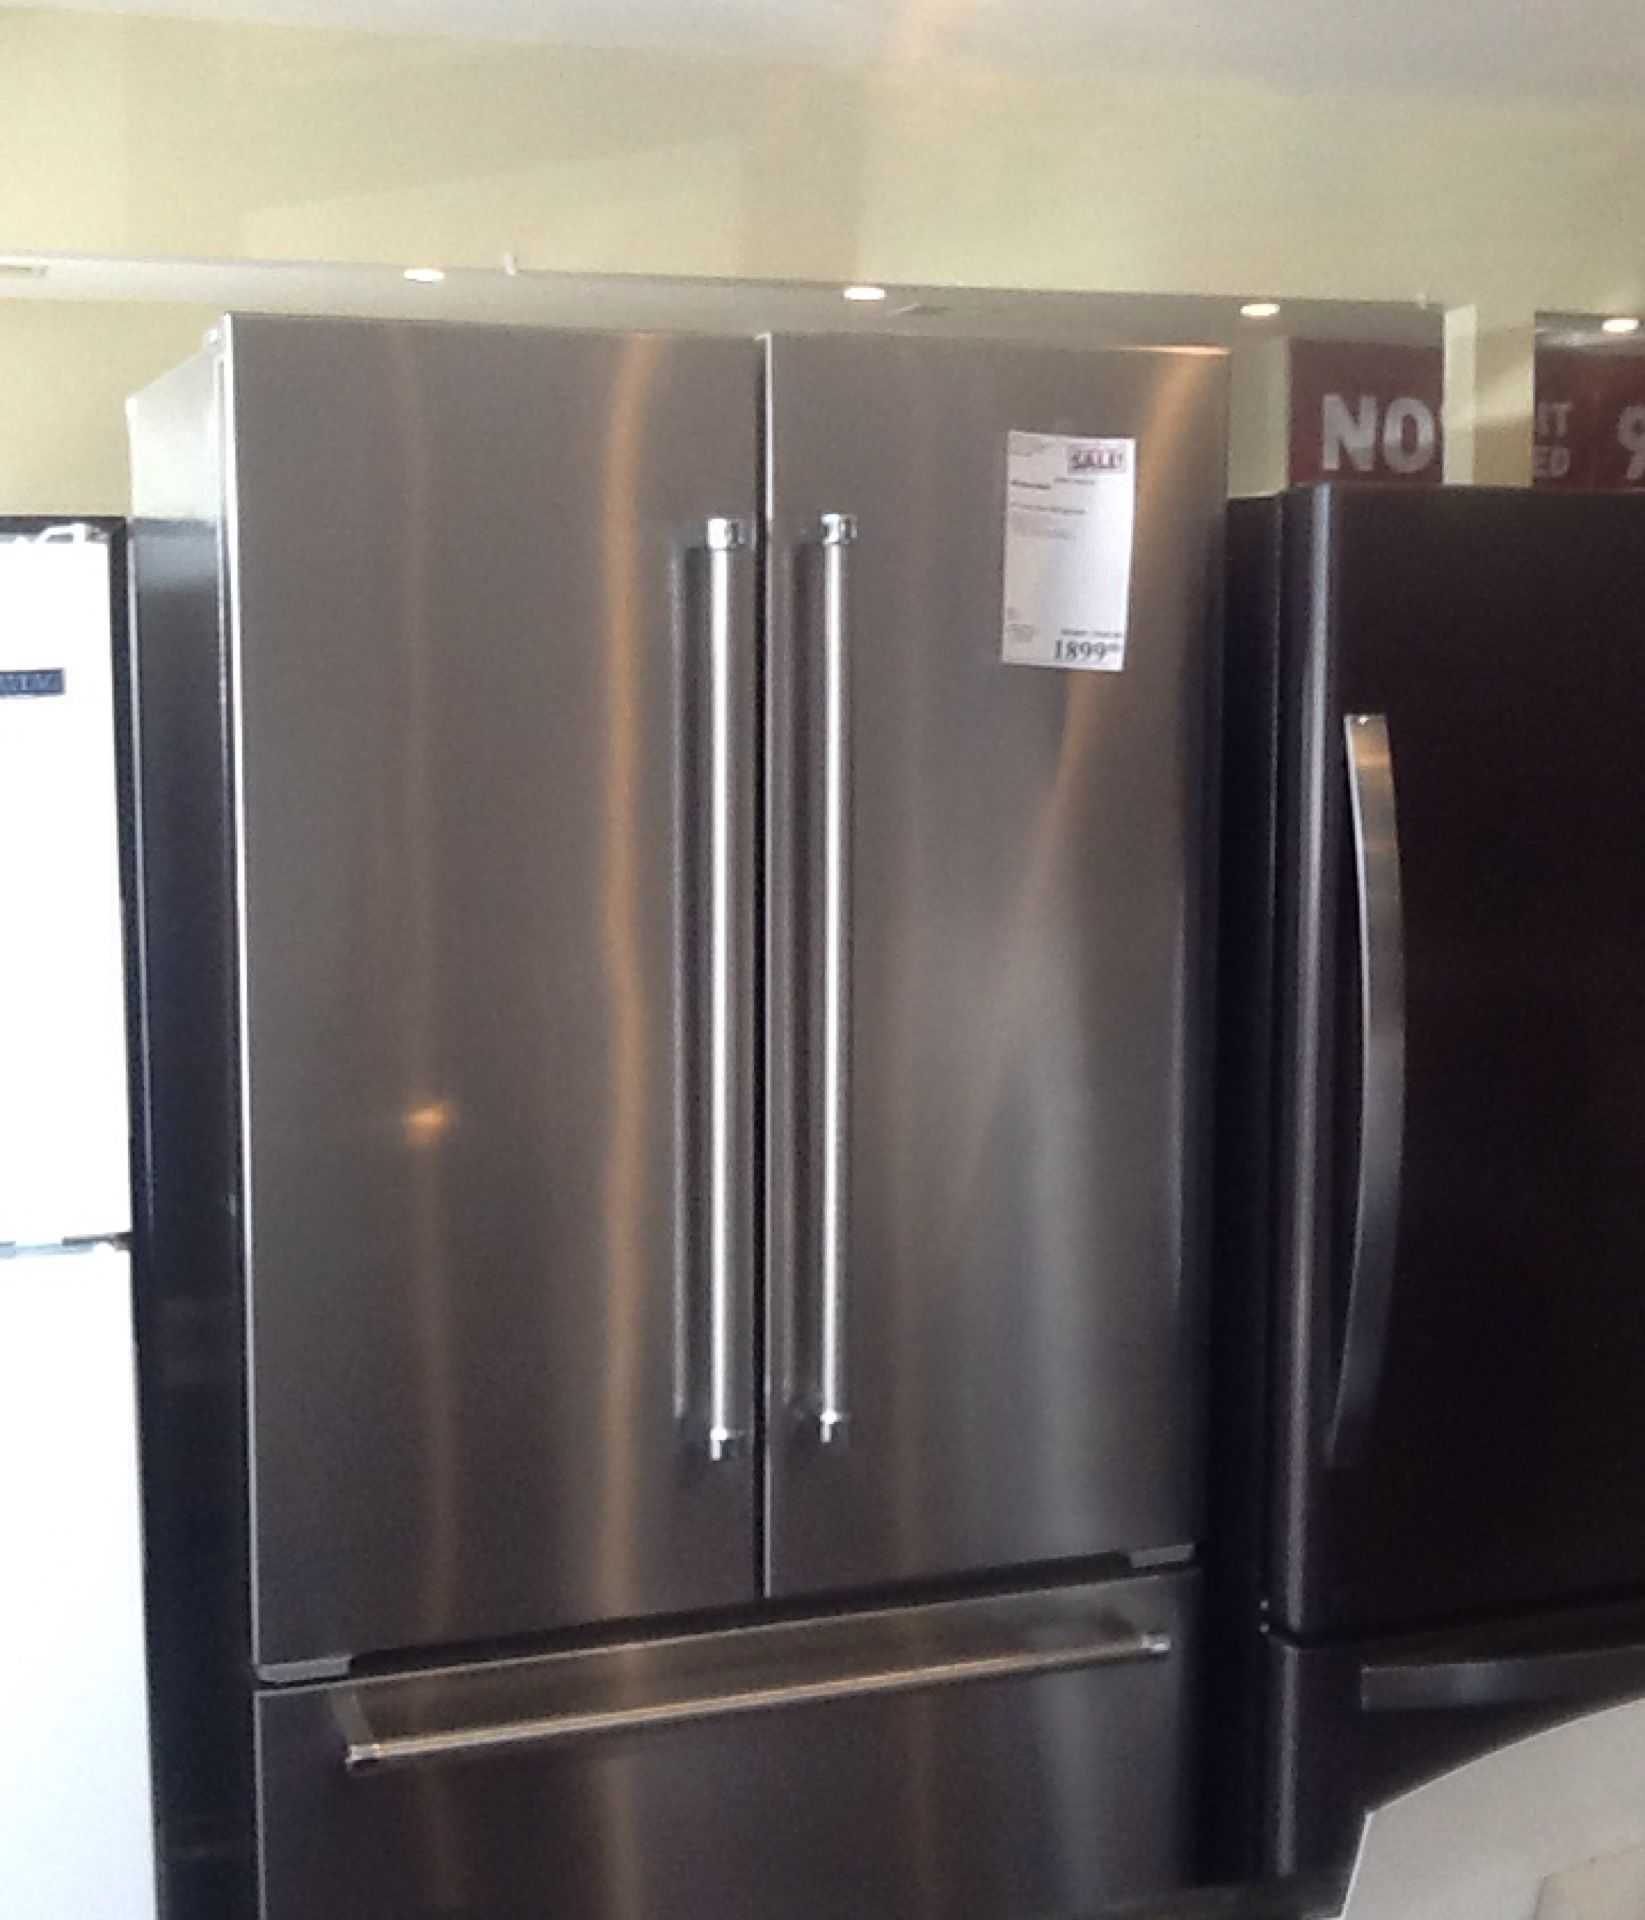 New open box kitchen aid refrigerator KRFC302ESS